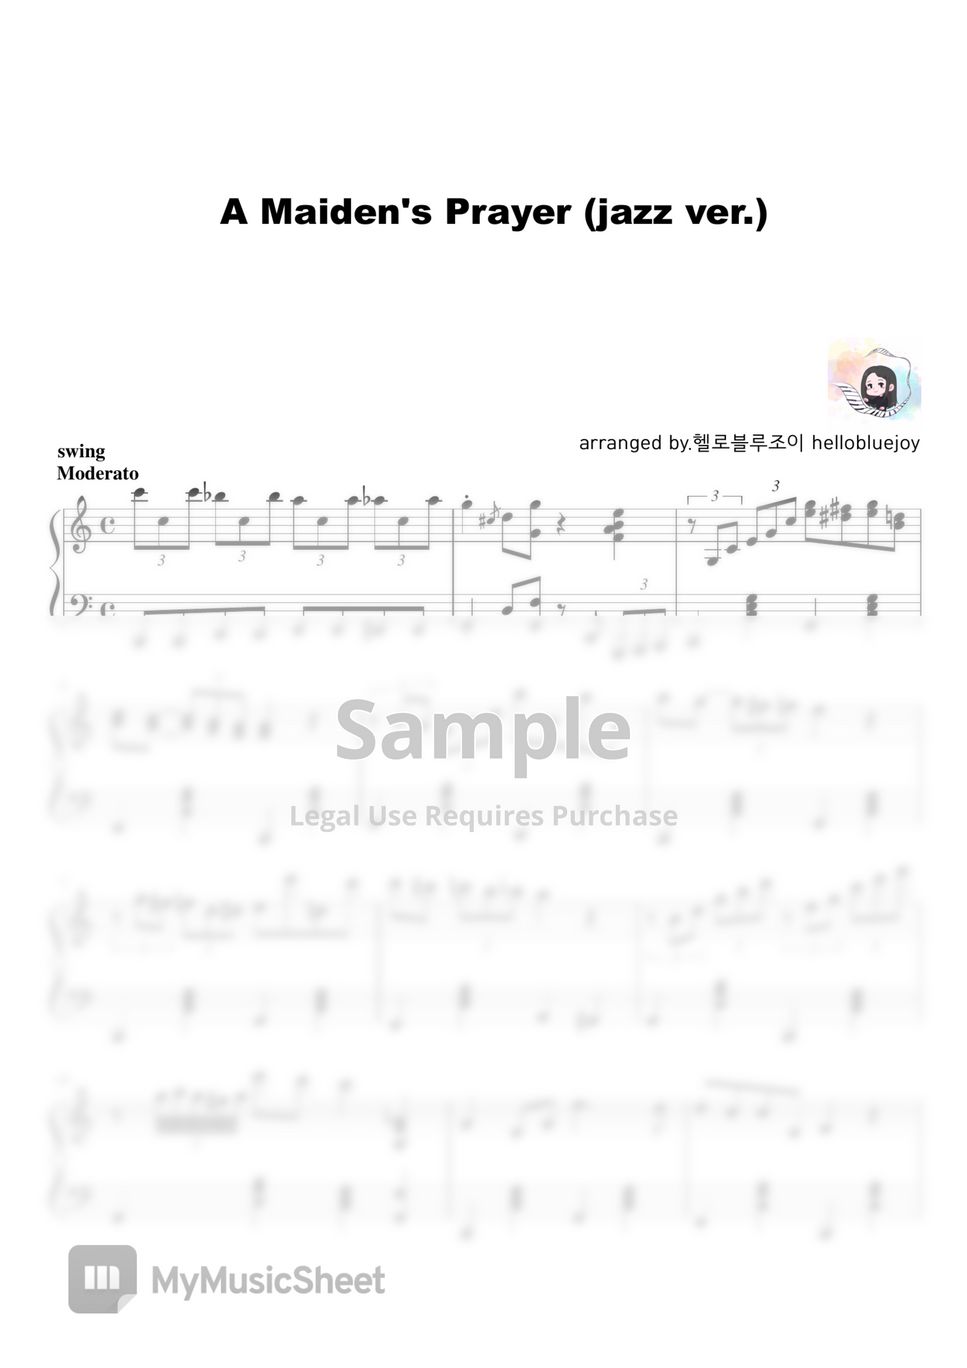 T. Badarzewska - The Maiden's Prayer (jazz ver.) by 헬로블루조이 hellobluejoy